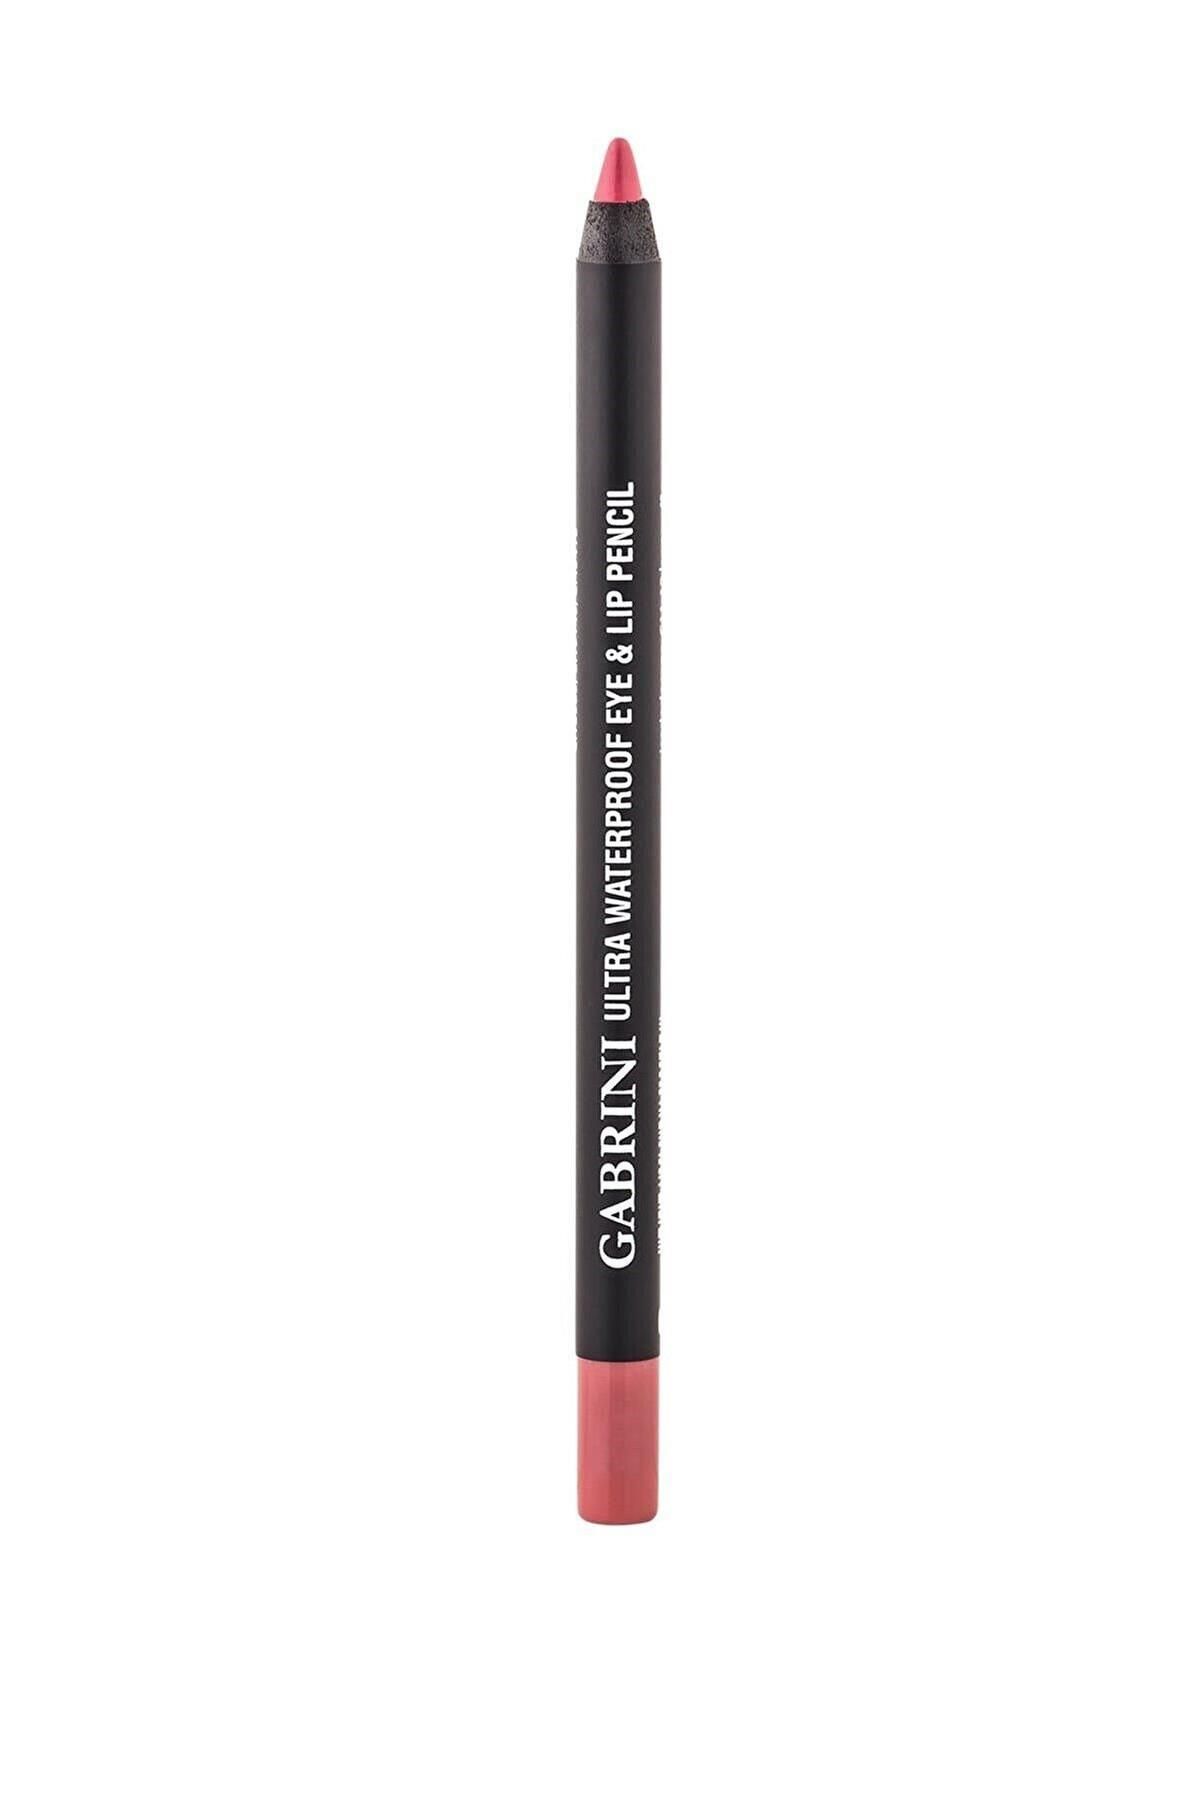 Gabrini Ultra Waterproof Eye & Lip Pencil 09